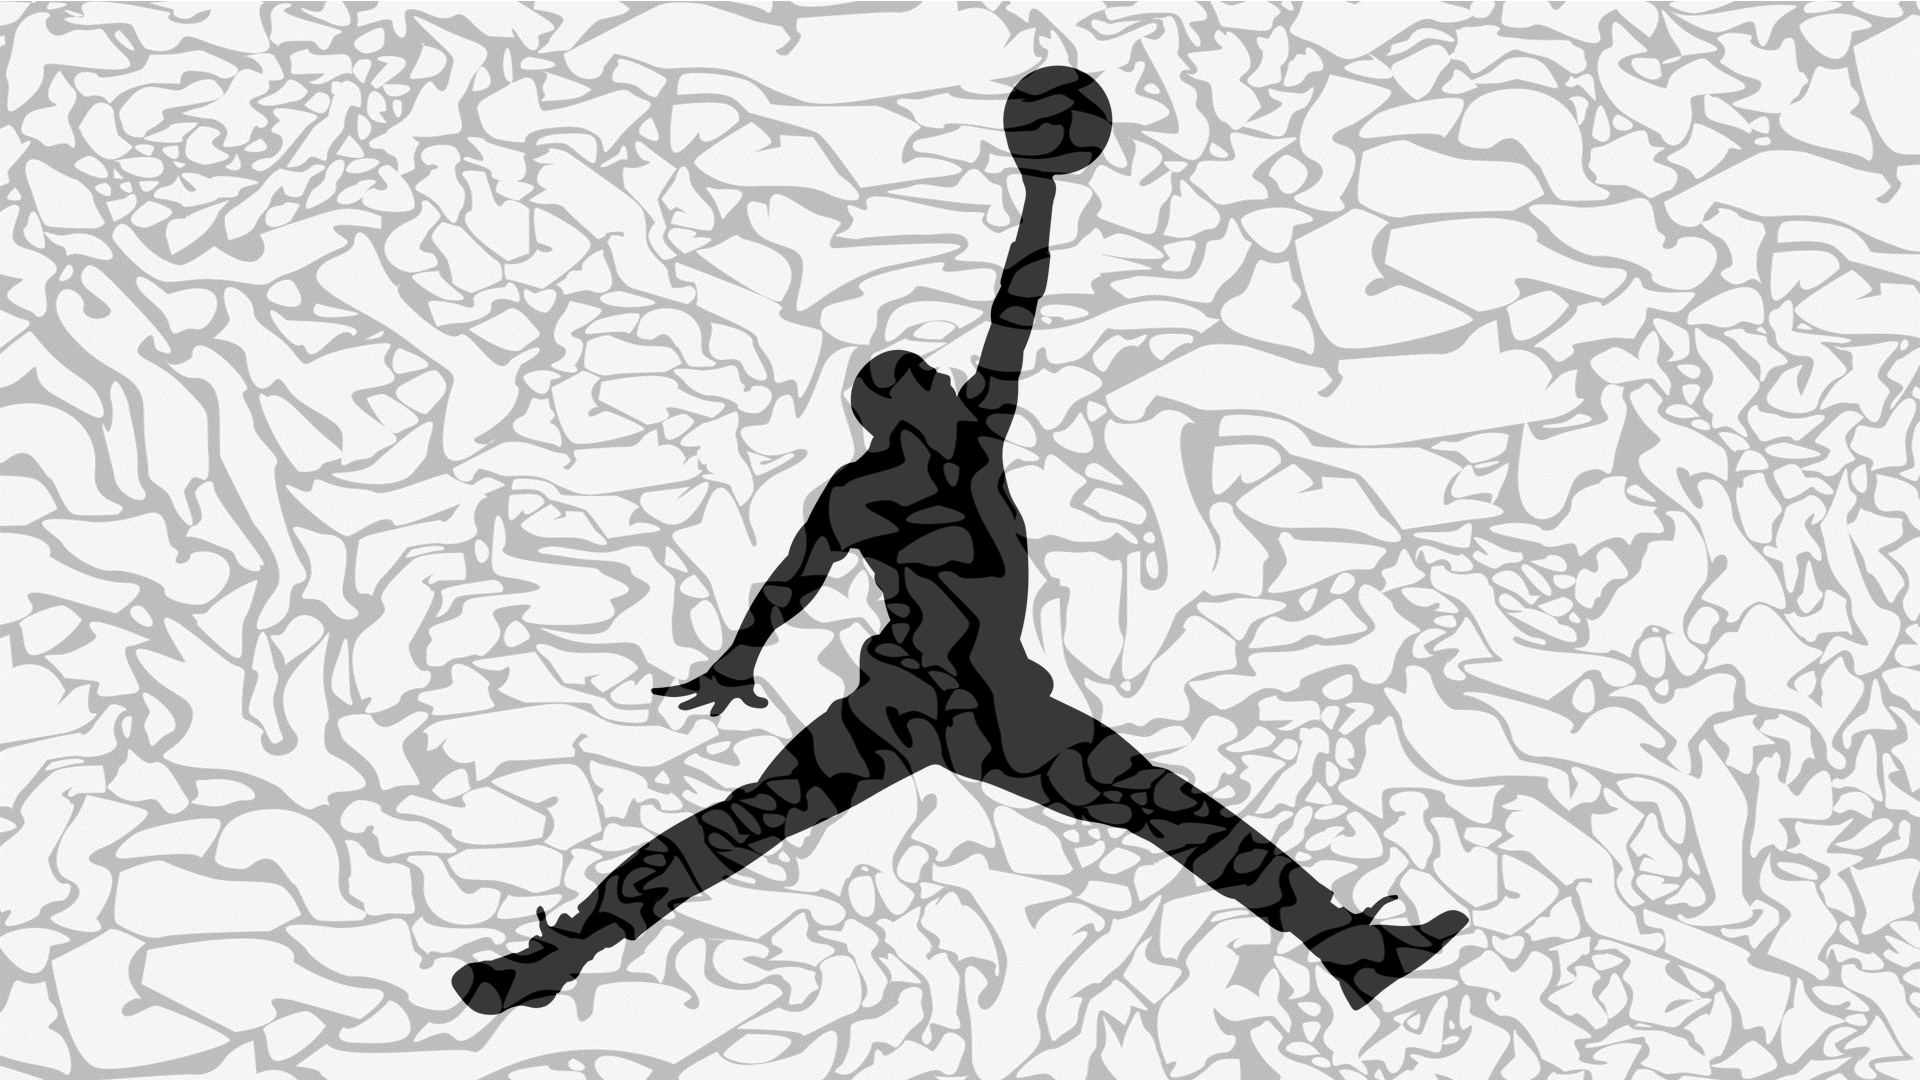 Air Jordan Wallpaper by jobhani on